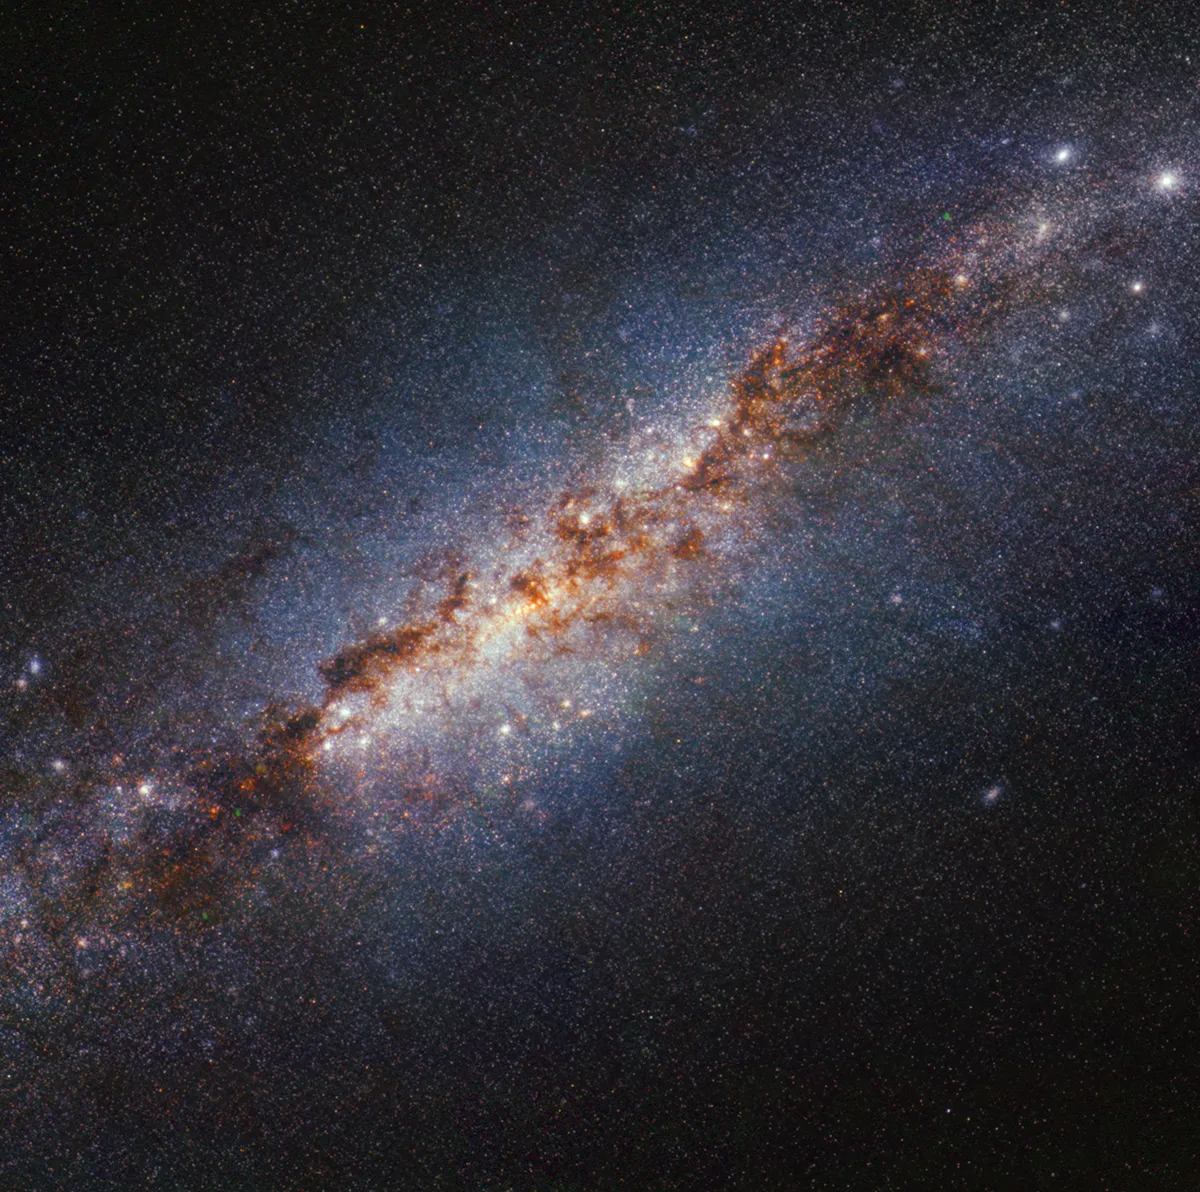 Image of galaxy M82 captured by the James Webb Space Telescope. Credit: NASA, ESA, CSA, STScI, Alberto Bolatto (UMD)